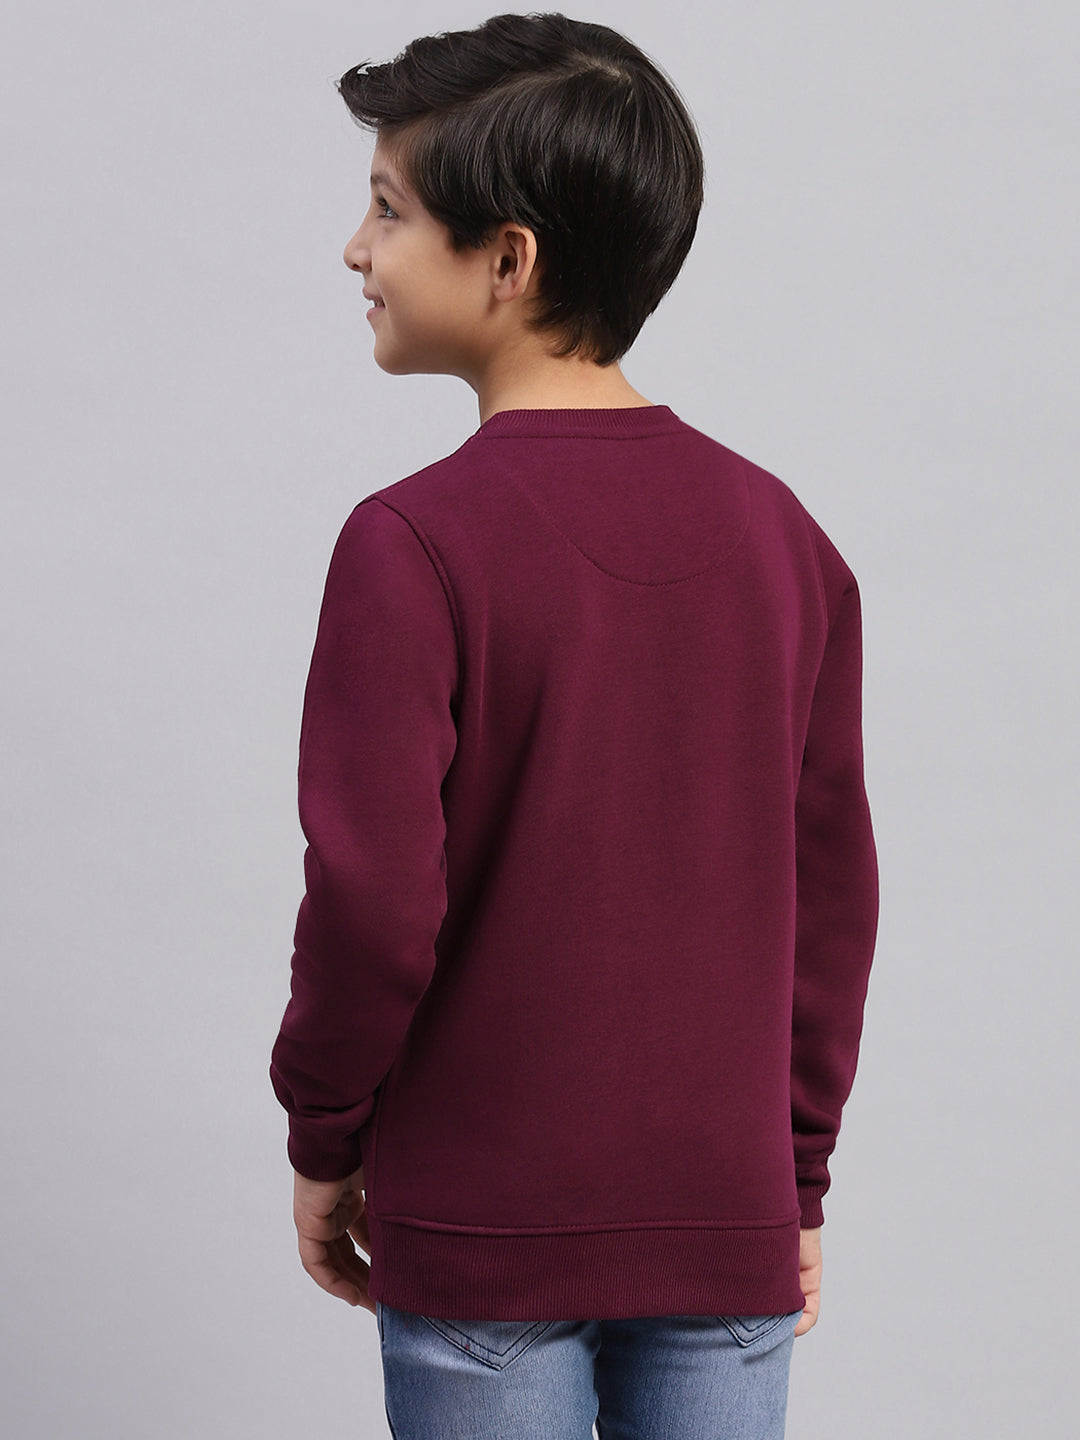 Boys Purple Printed Round Neck Full Sleeve Sweatshirt